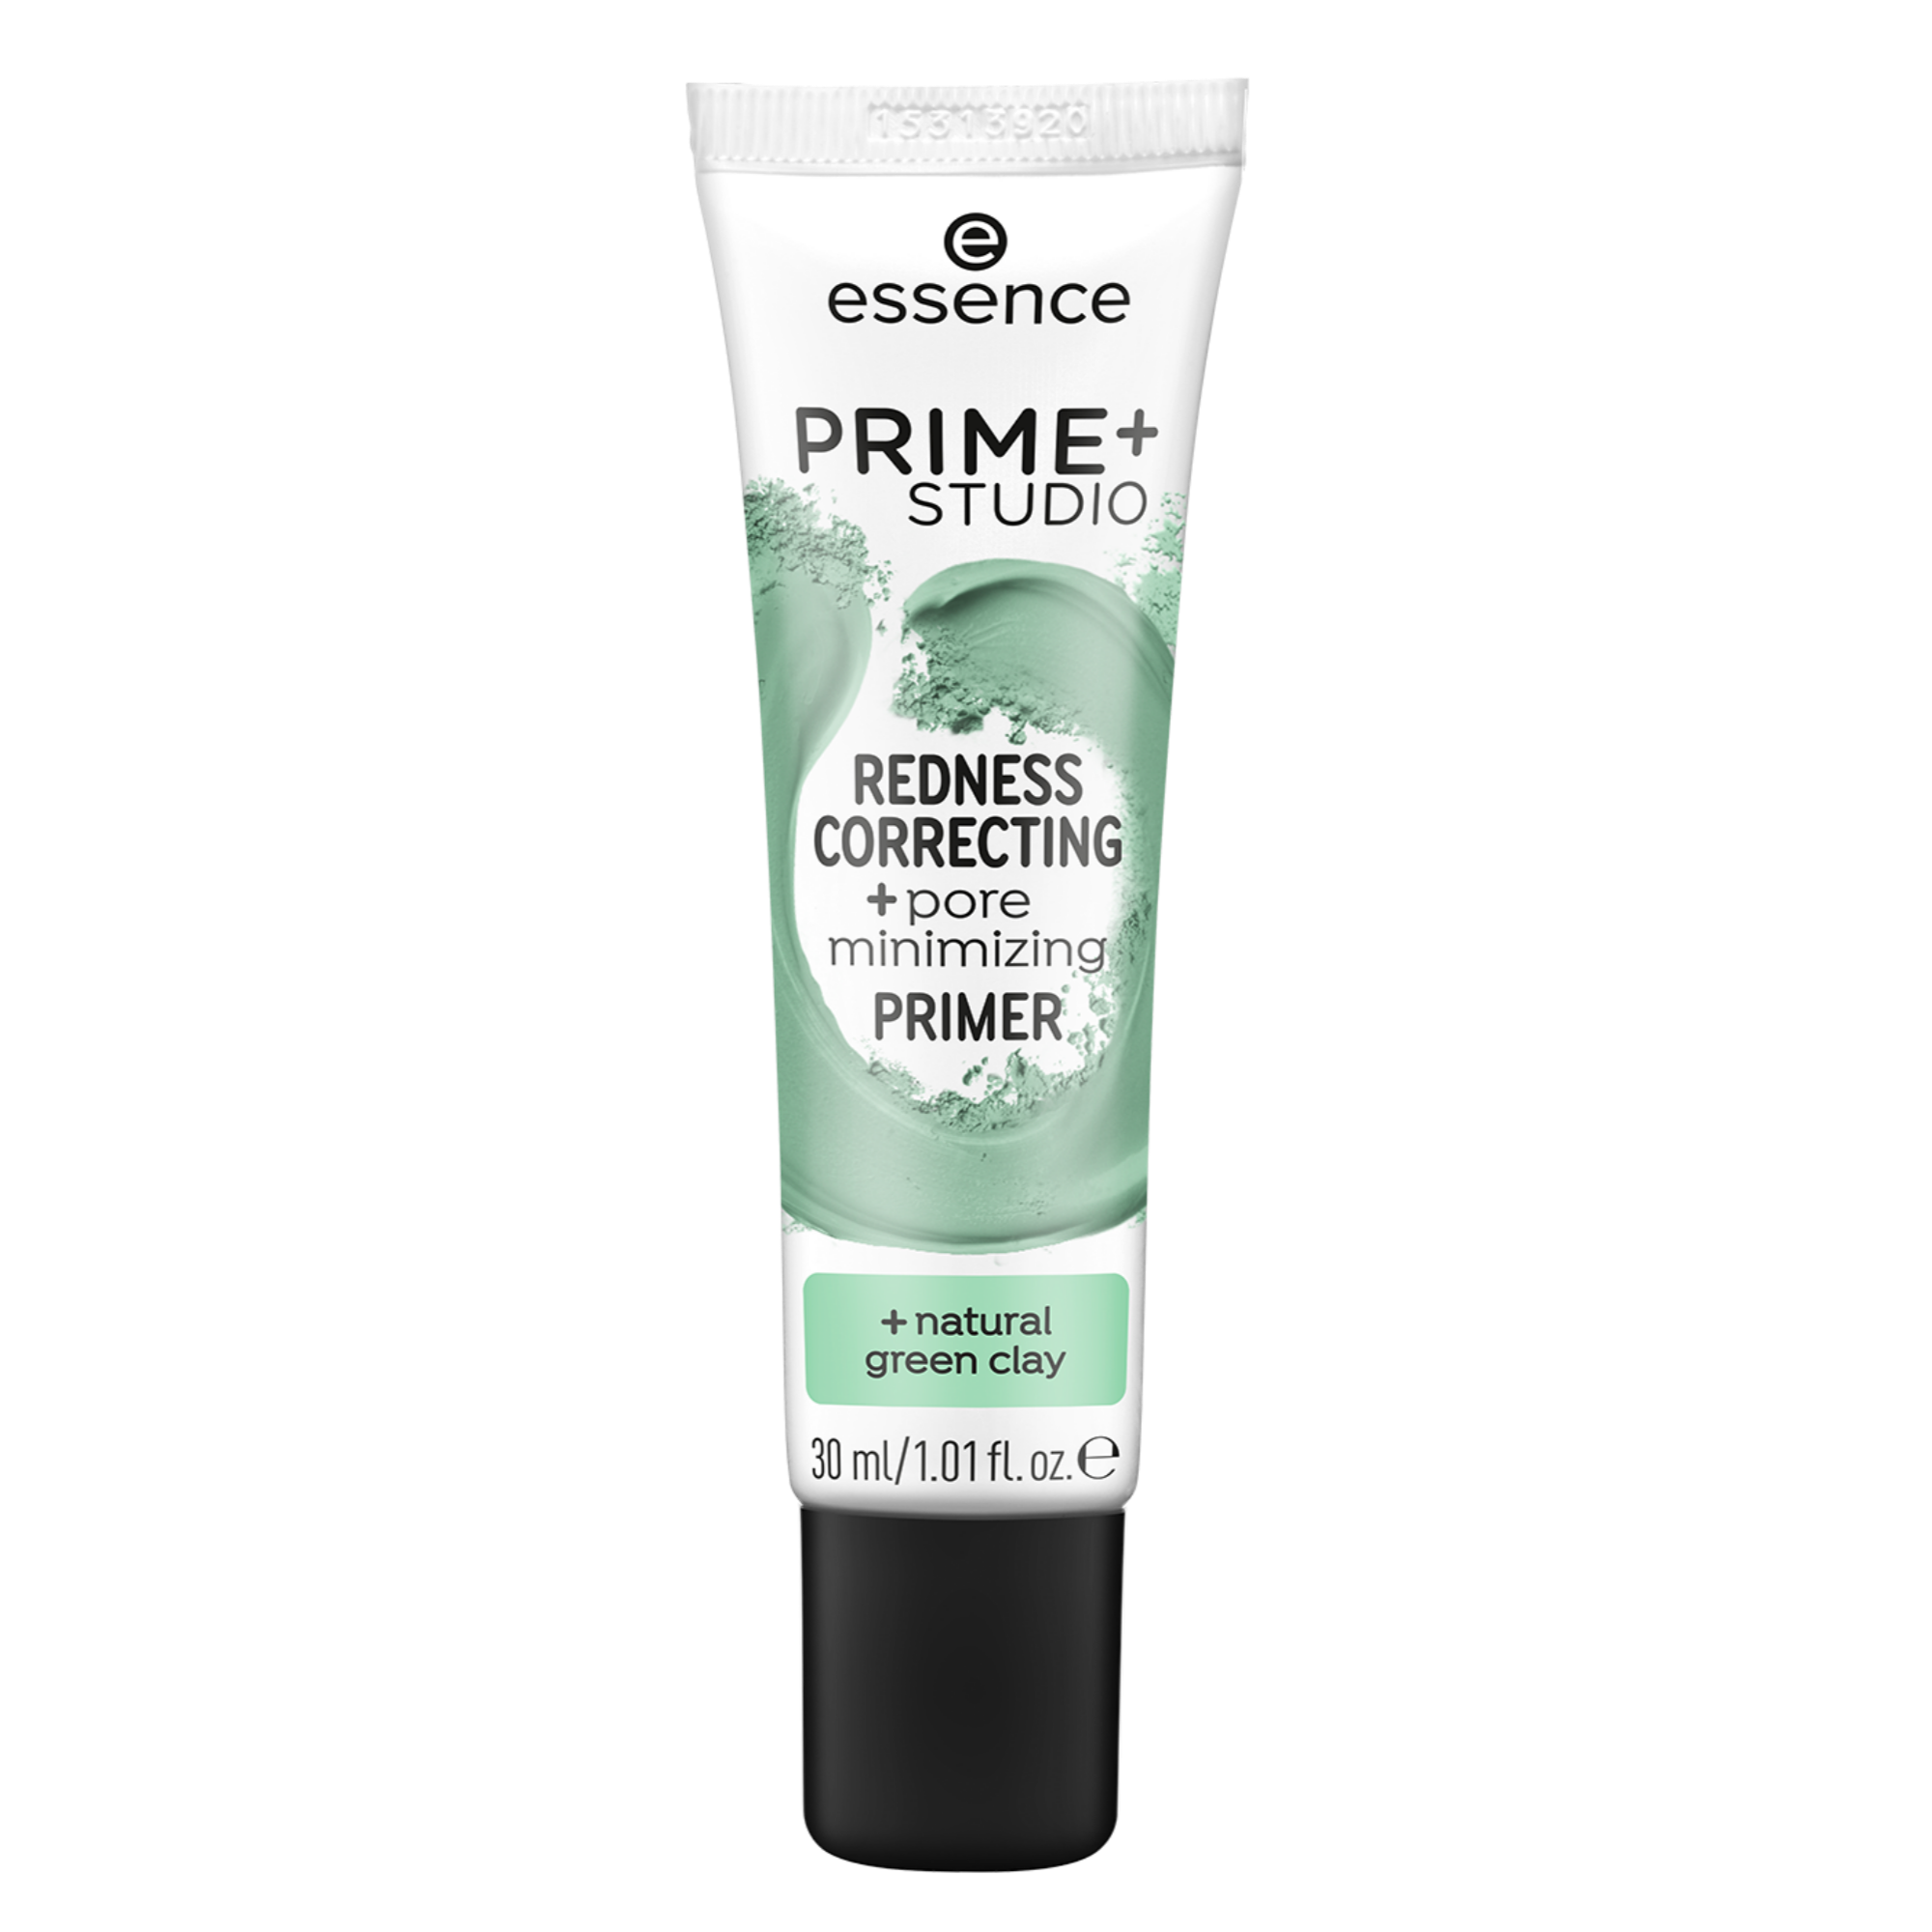 PRIME+ STUDIO REDNESS CORRECTING +pore minimizing PRIMER